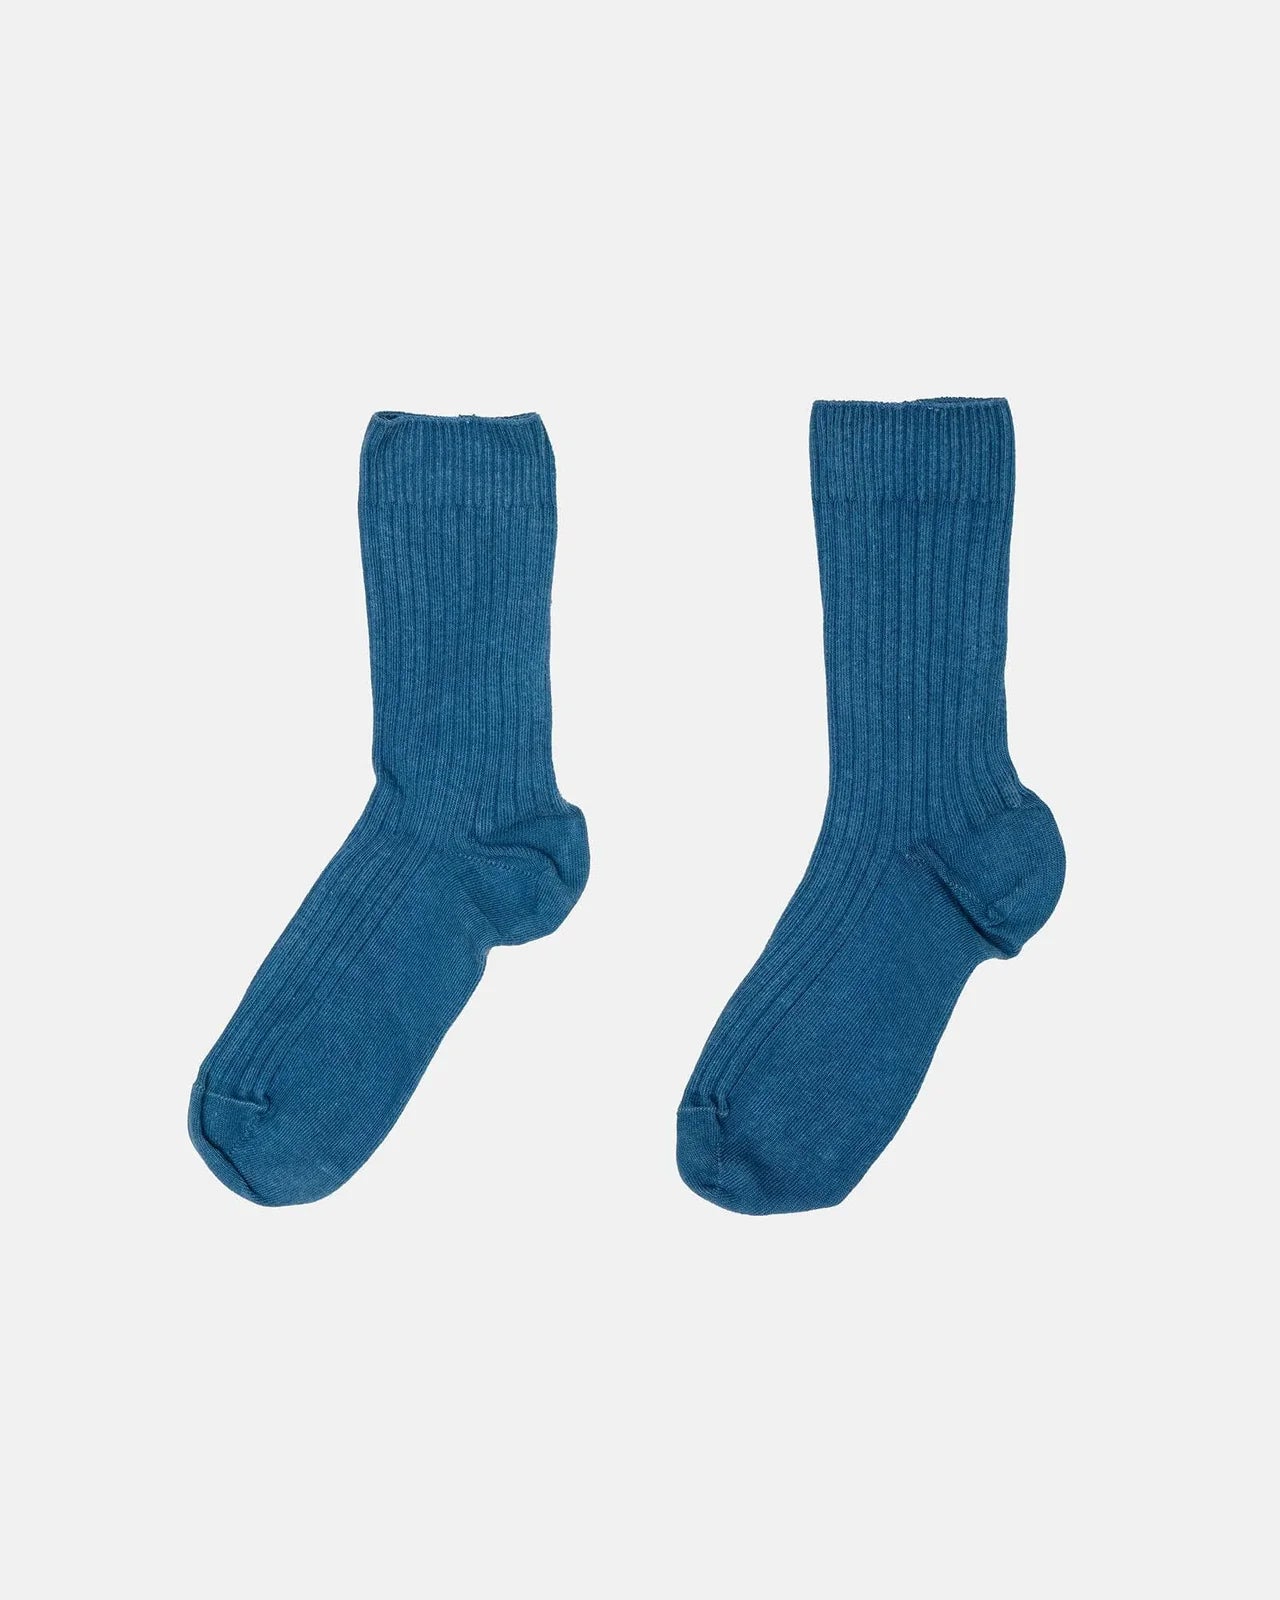 Rib Ankle Socks / Dark Isatis Blue